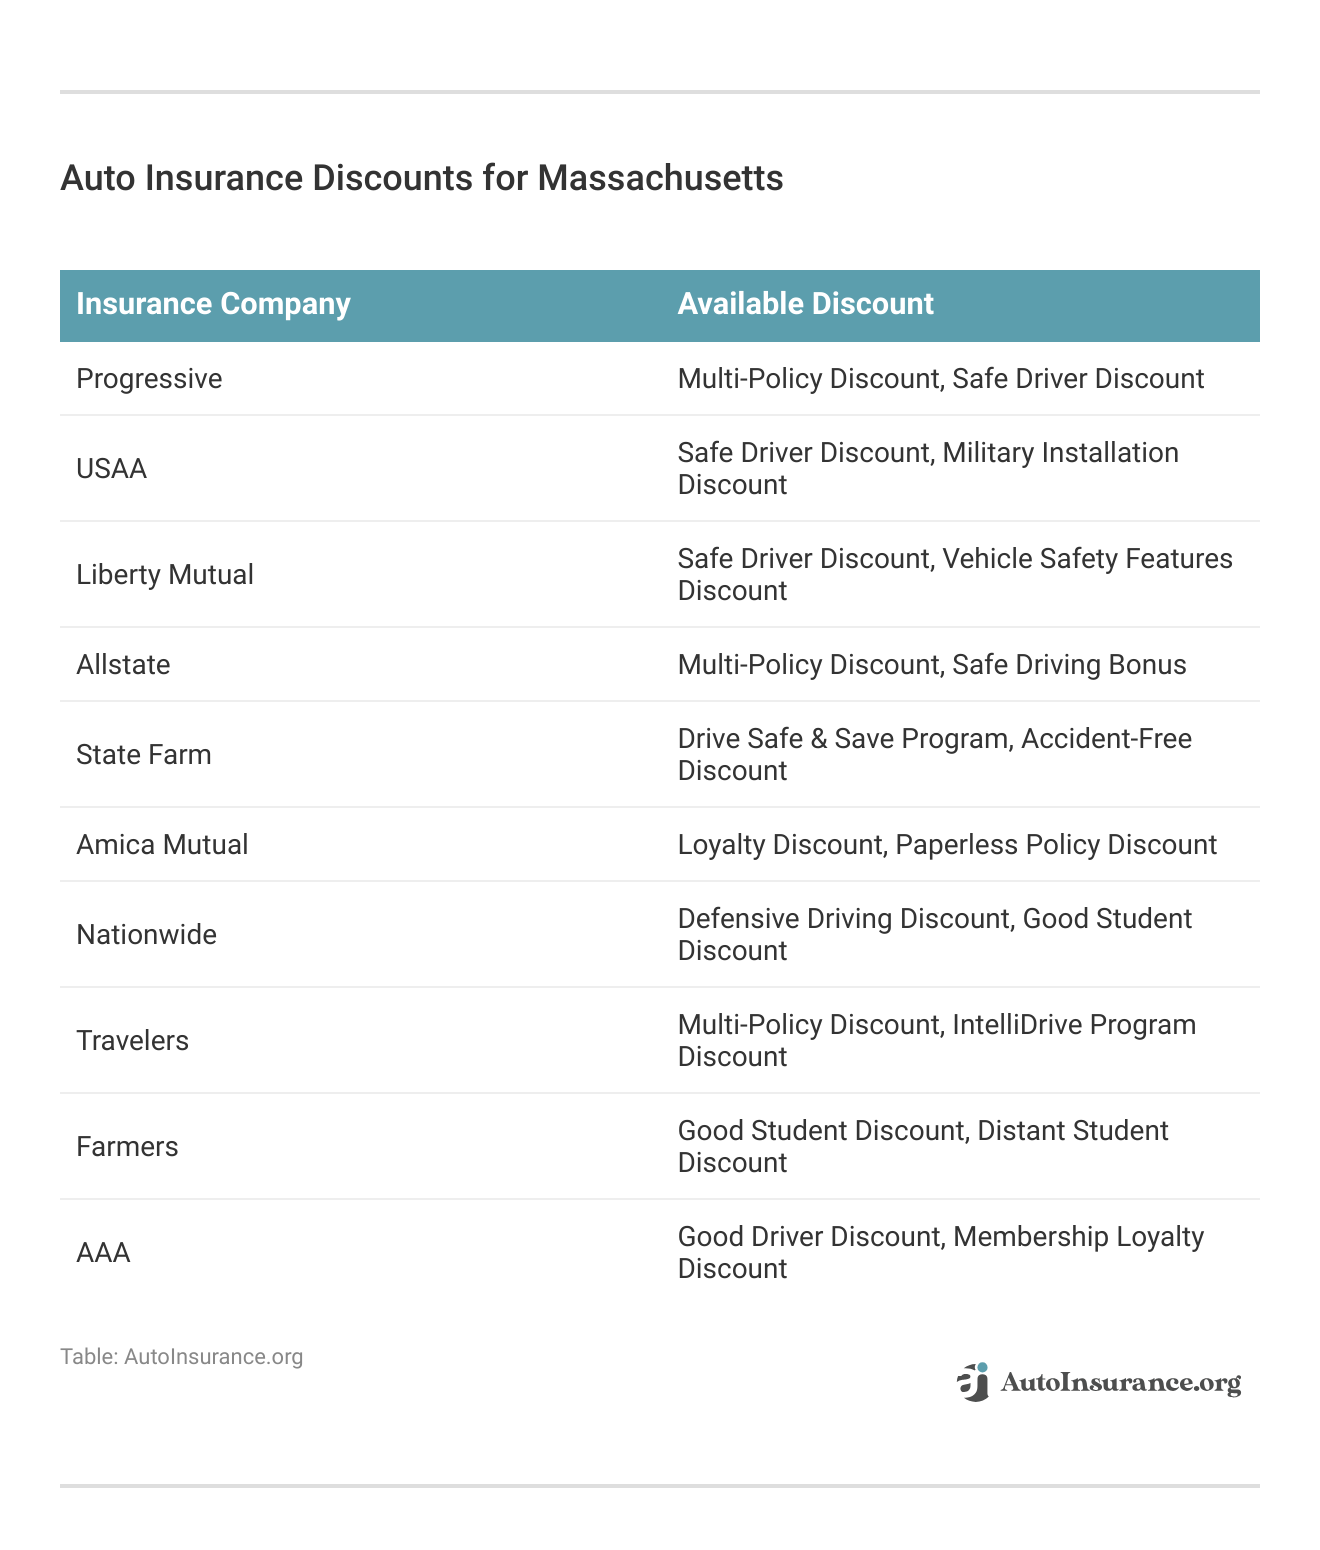 <h3>Auto Insurance Discounts for Massachusetts</h3>